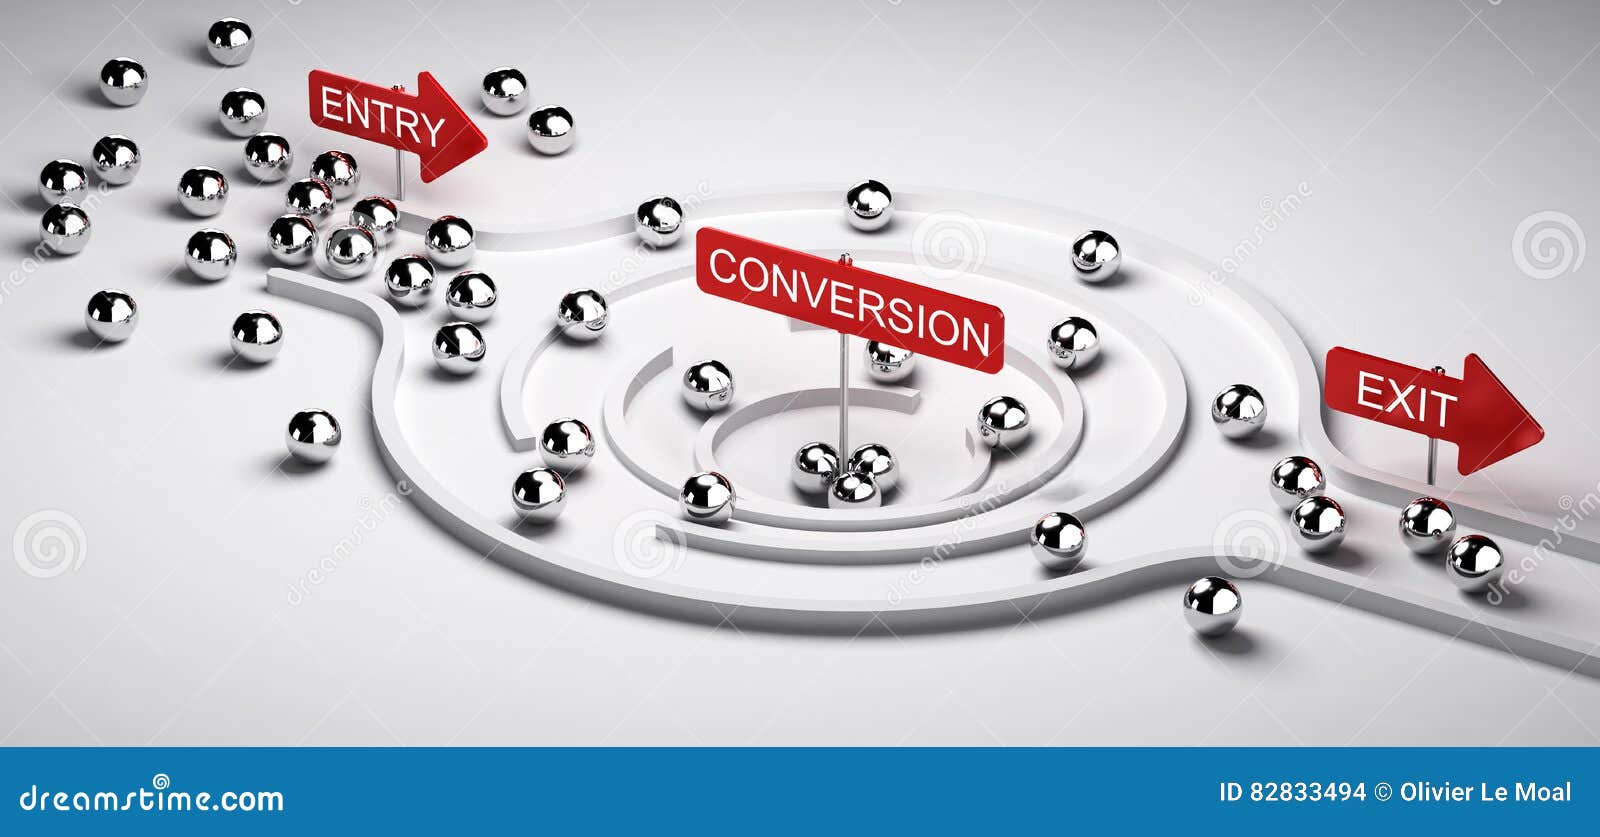 marketing conversion funnel